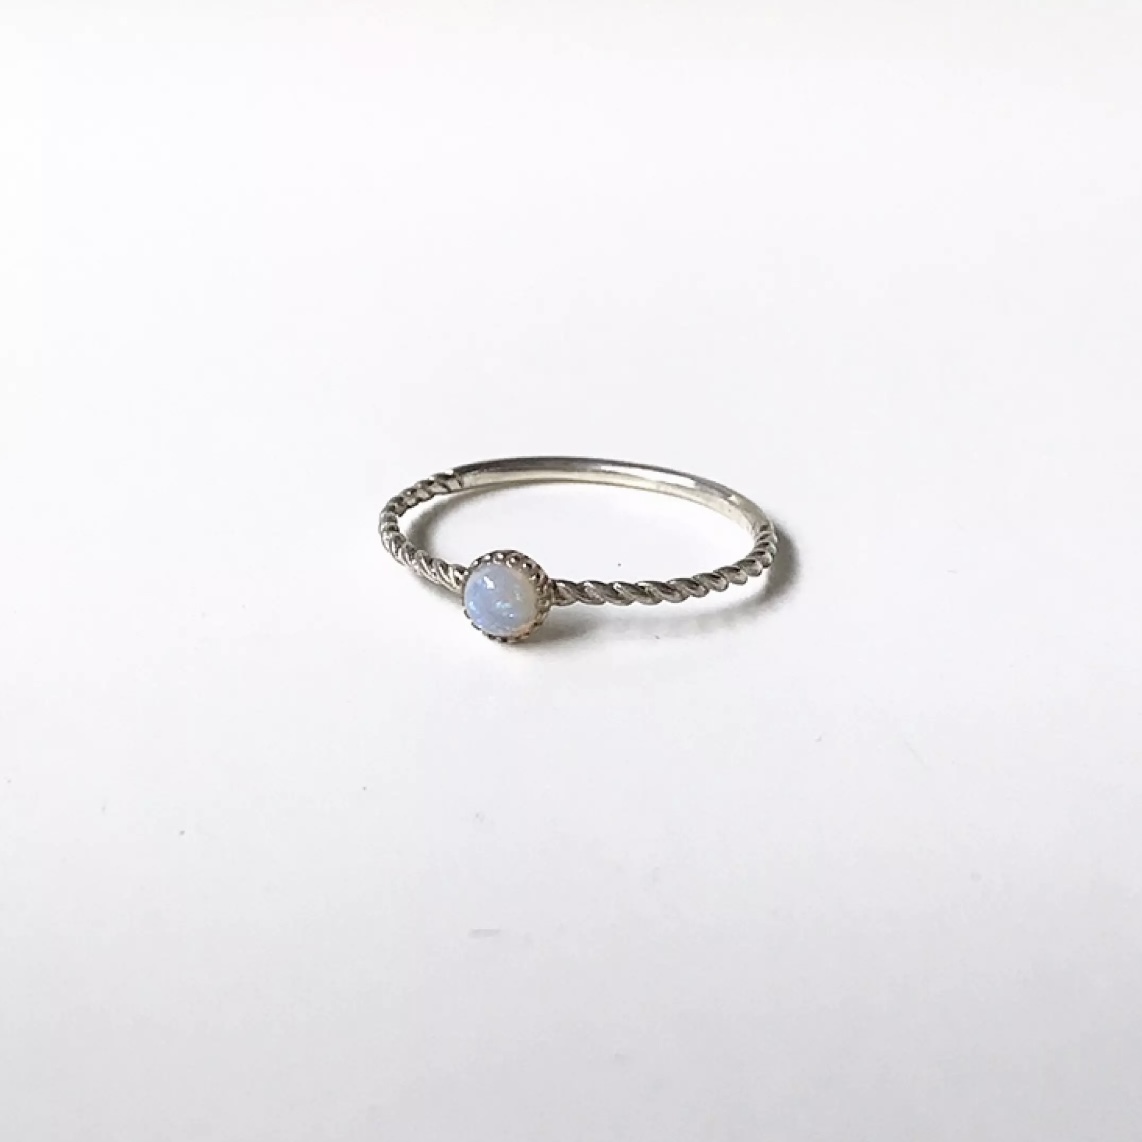 Winterwinter Jewelry Silver925 : เครื่องประดับเงินแท้ เงินแท้925 แหวนเงินแท้ แหวนโอปอล์ทรงกลม ตัวเรือนเกลียว ( opal stone )  color Silverขนาดแหวน 6